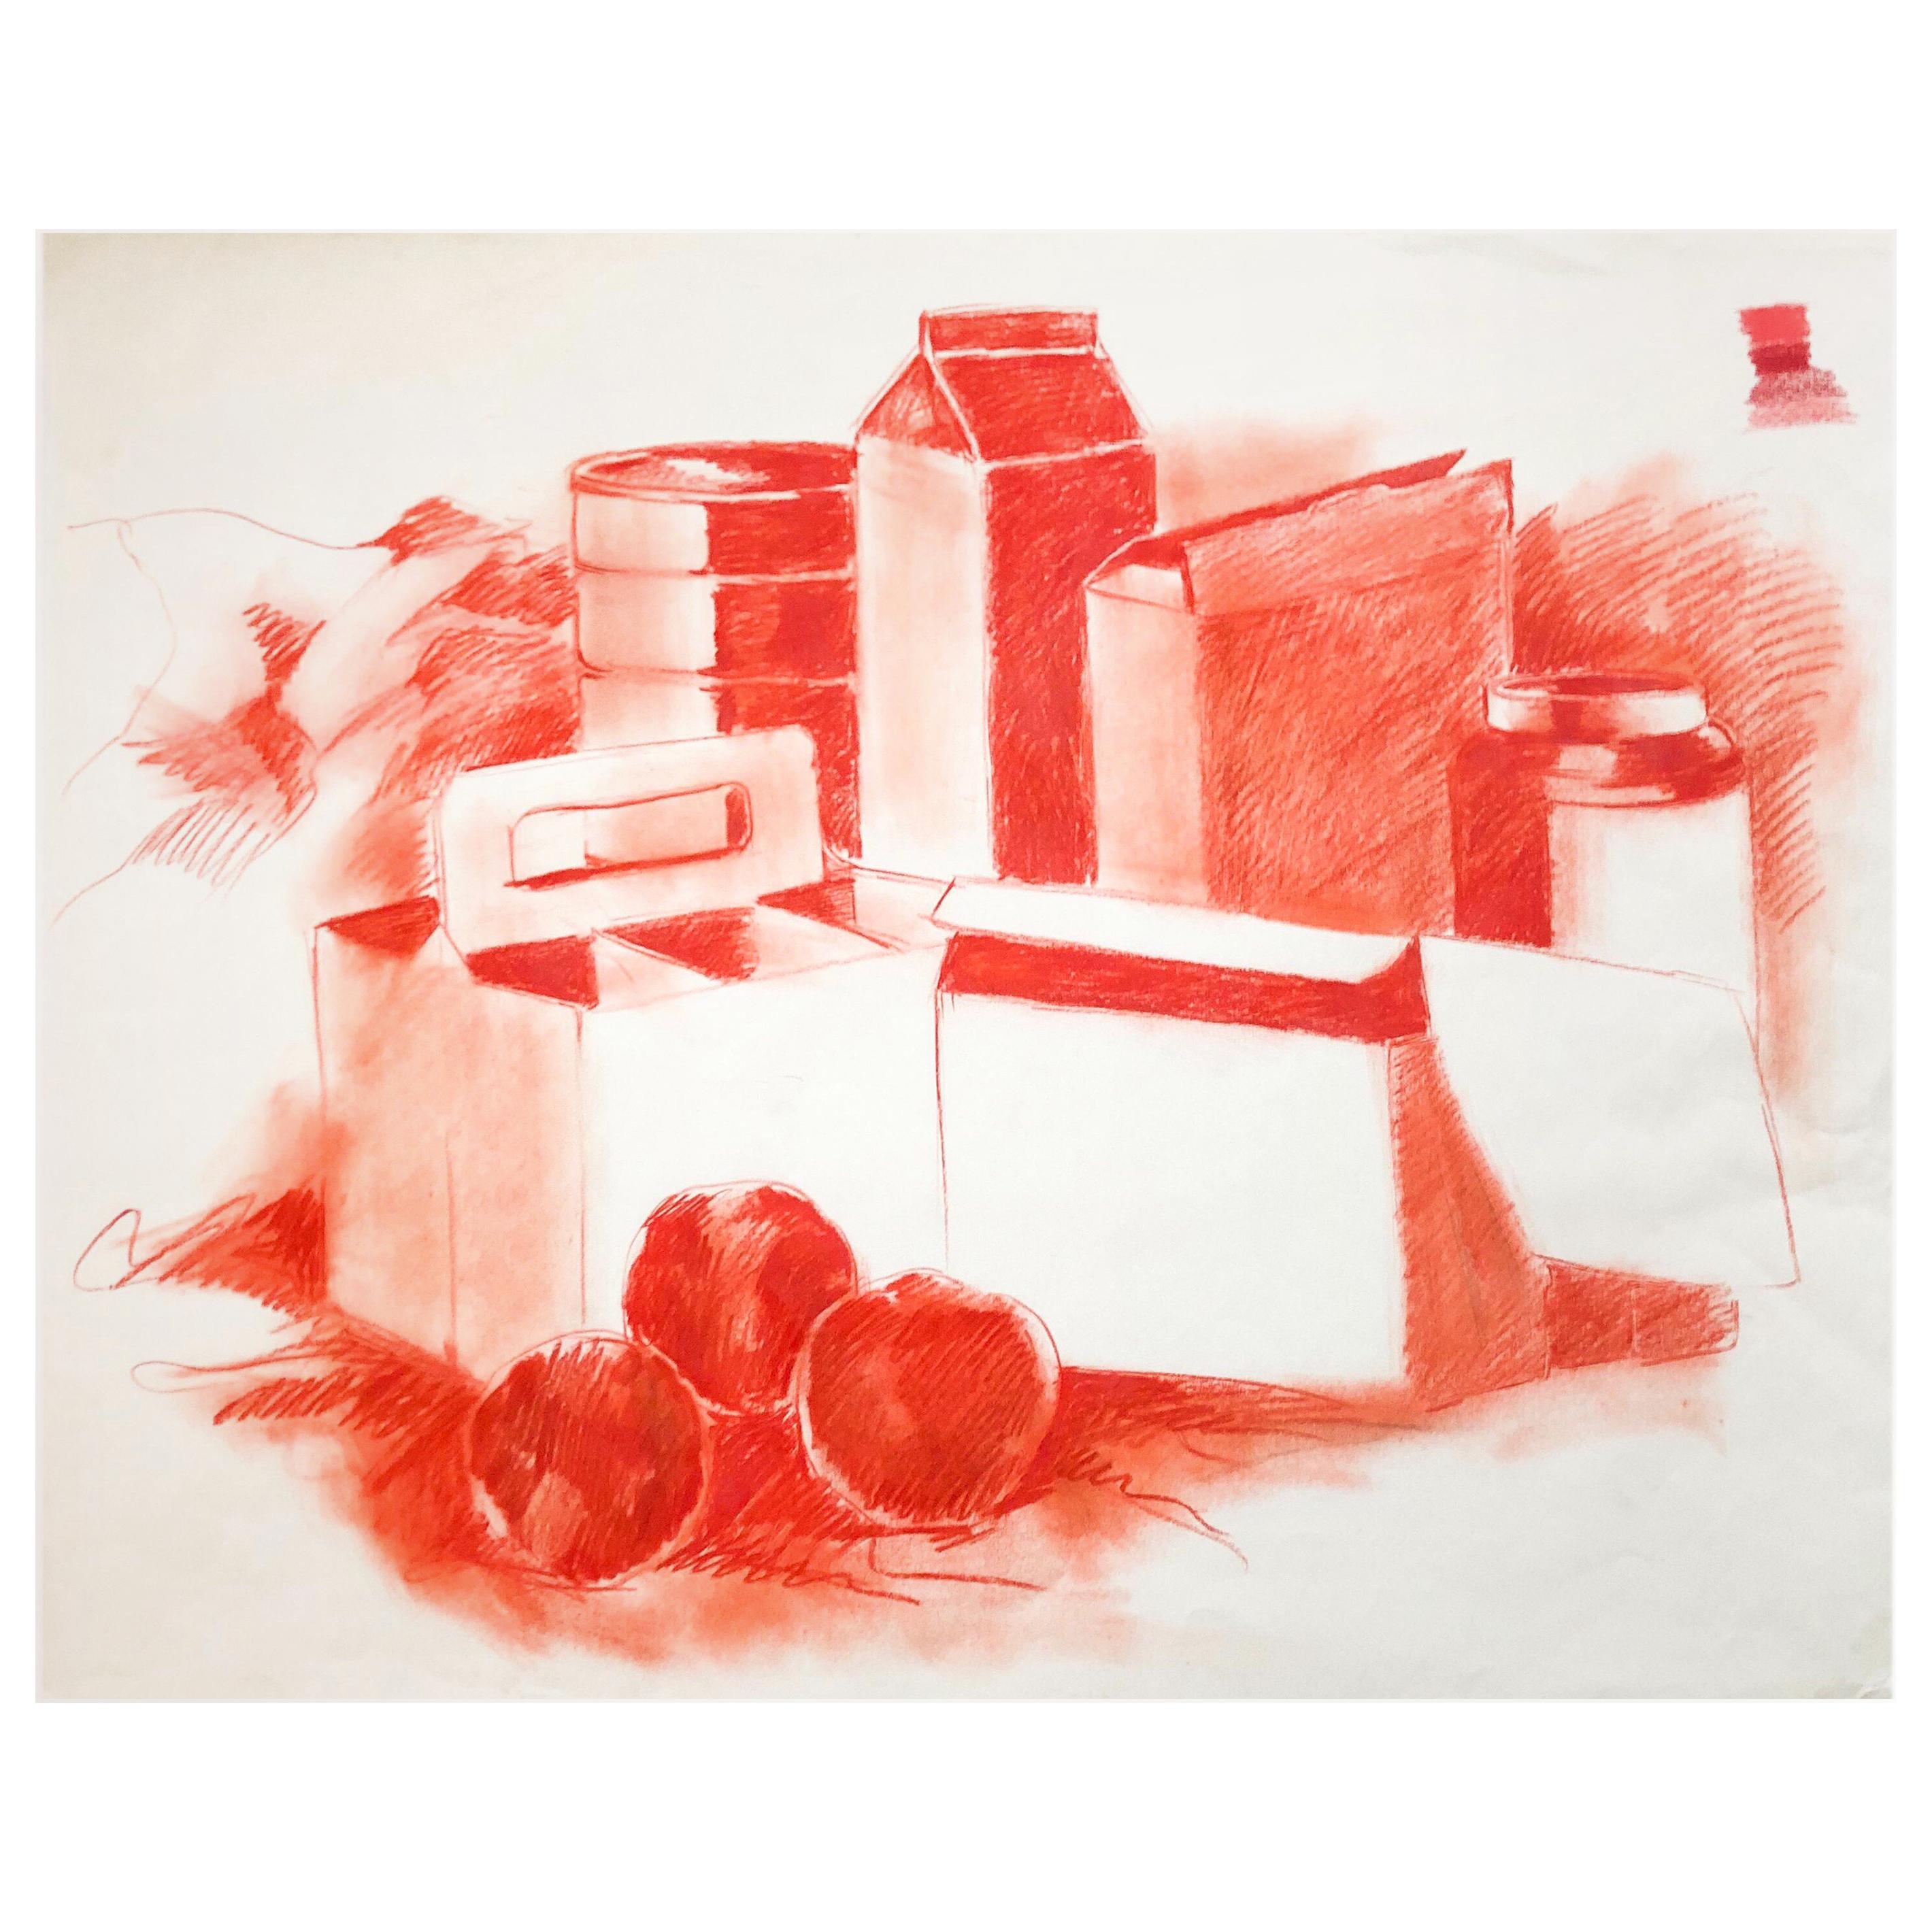 Mid-century Pop Art Red Still Life Drawing Sketch by Salvatore Grippi, 1960s Mod